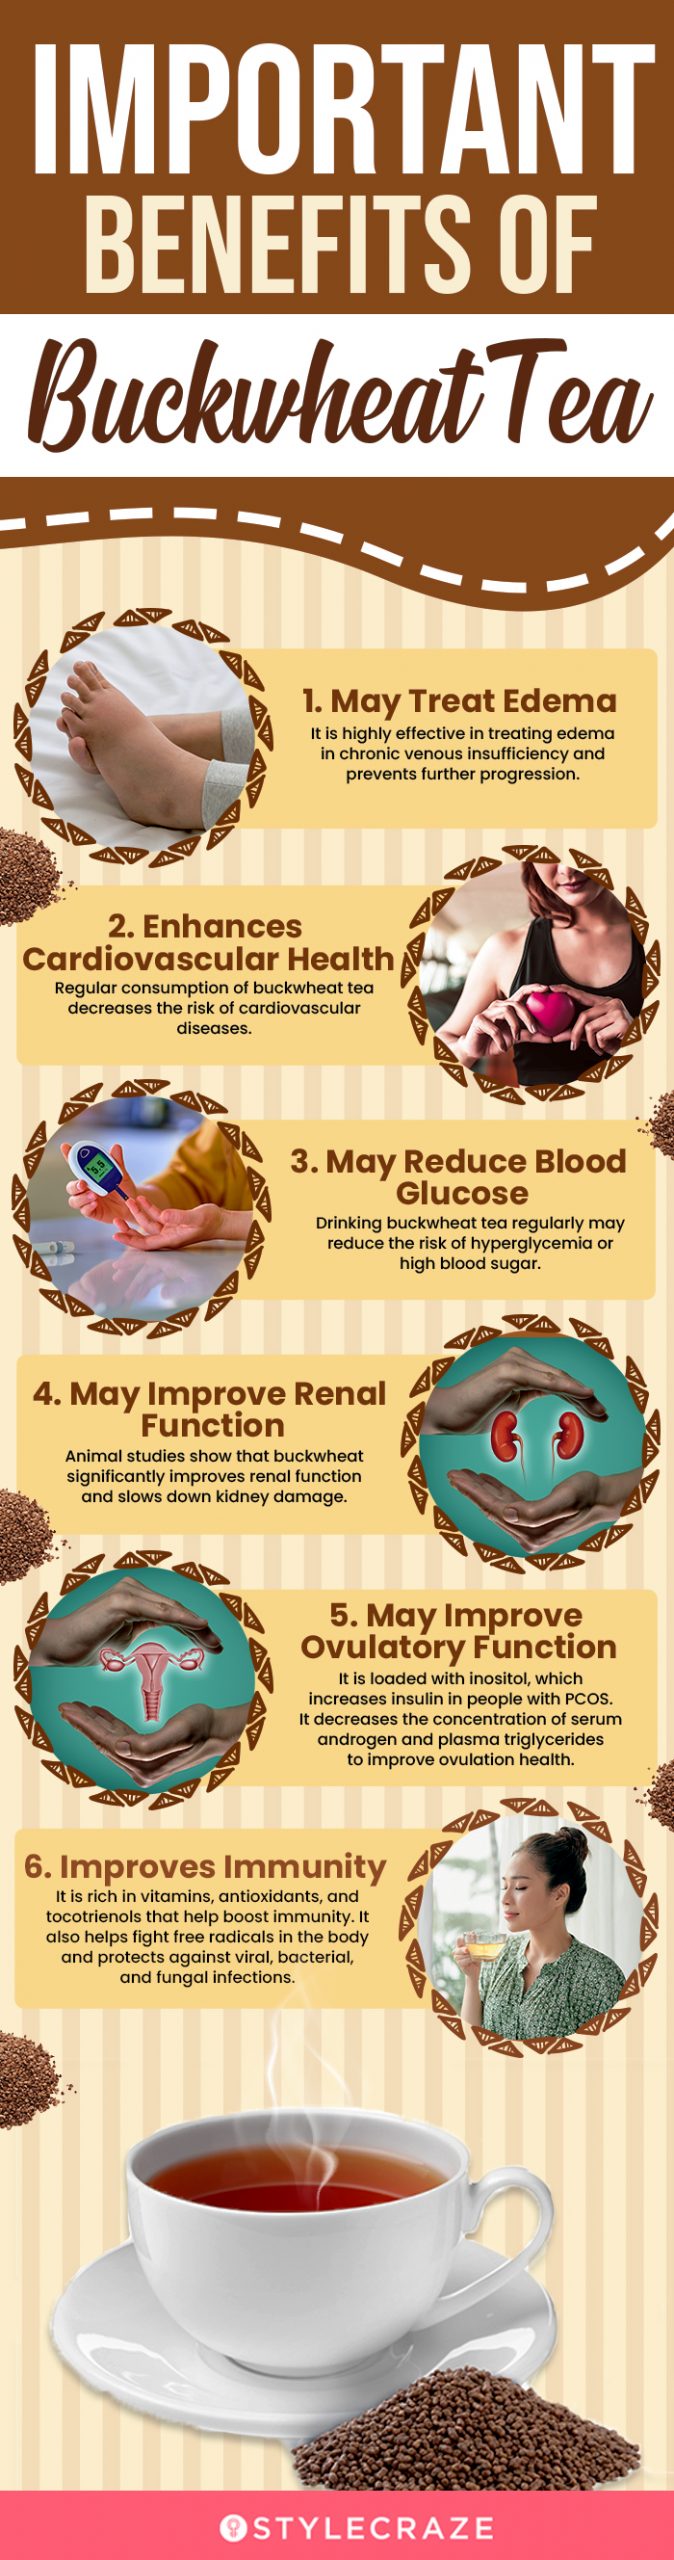 important benefits of buckwheat tea (infographic)